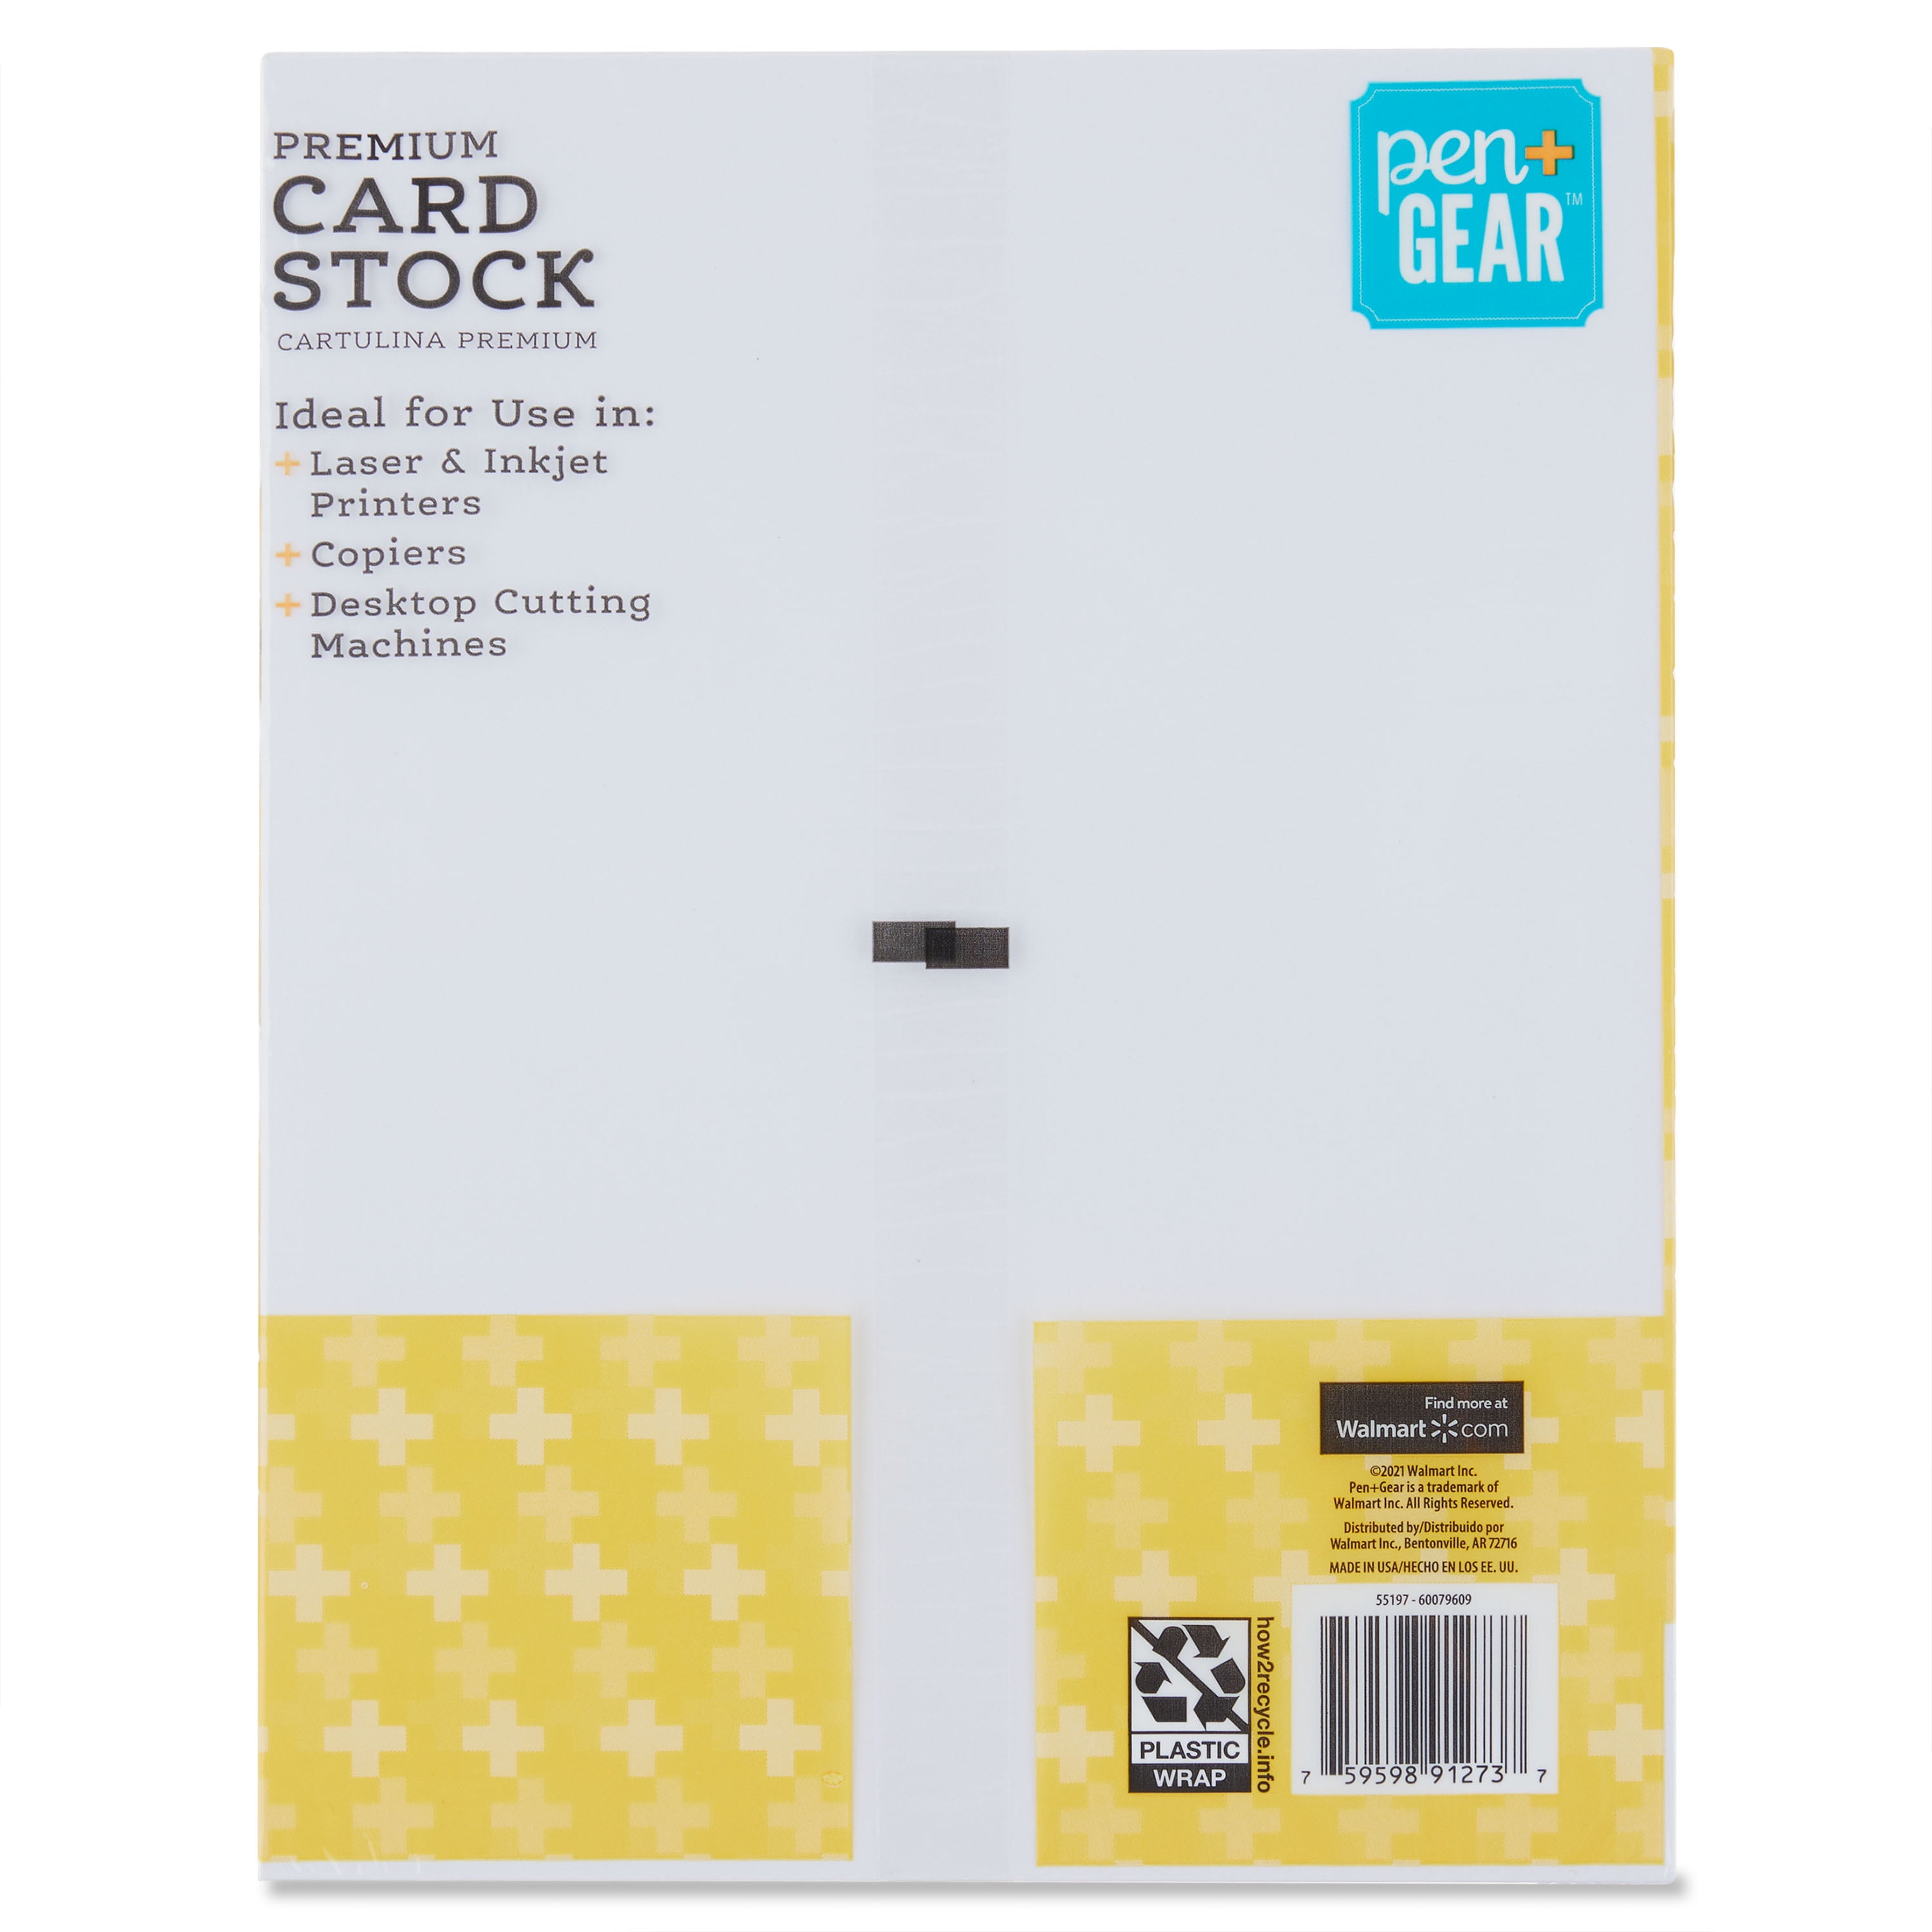 Pen + Gear Card Stock Paper, Assorted Bright, 8.5 x 11, 65 lb, 75 Sheets, 55306